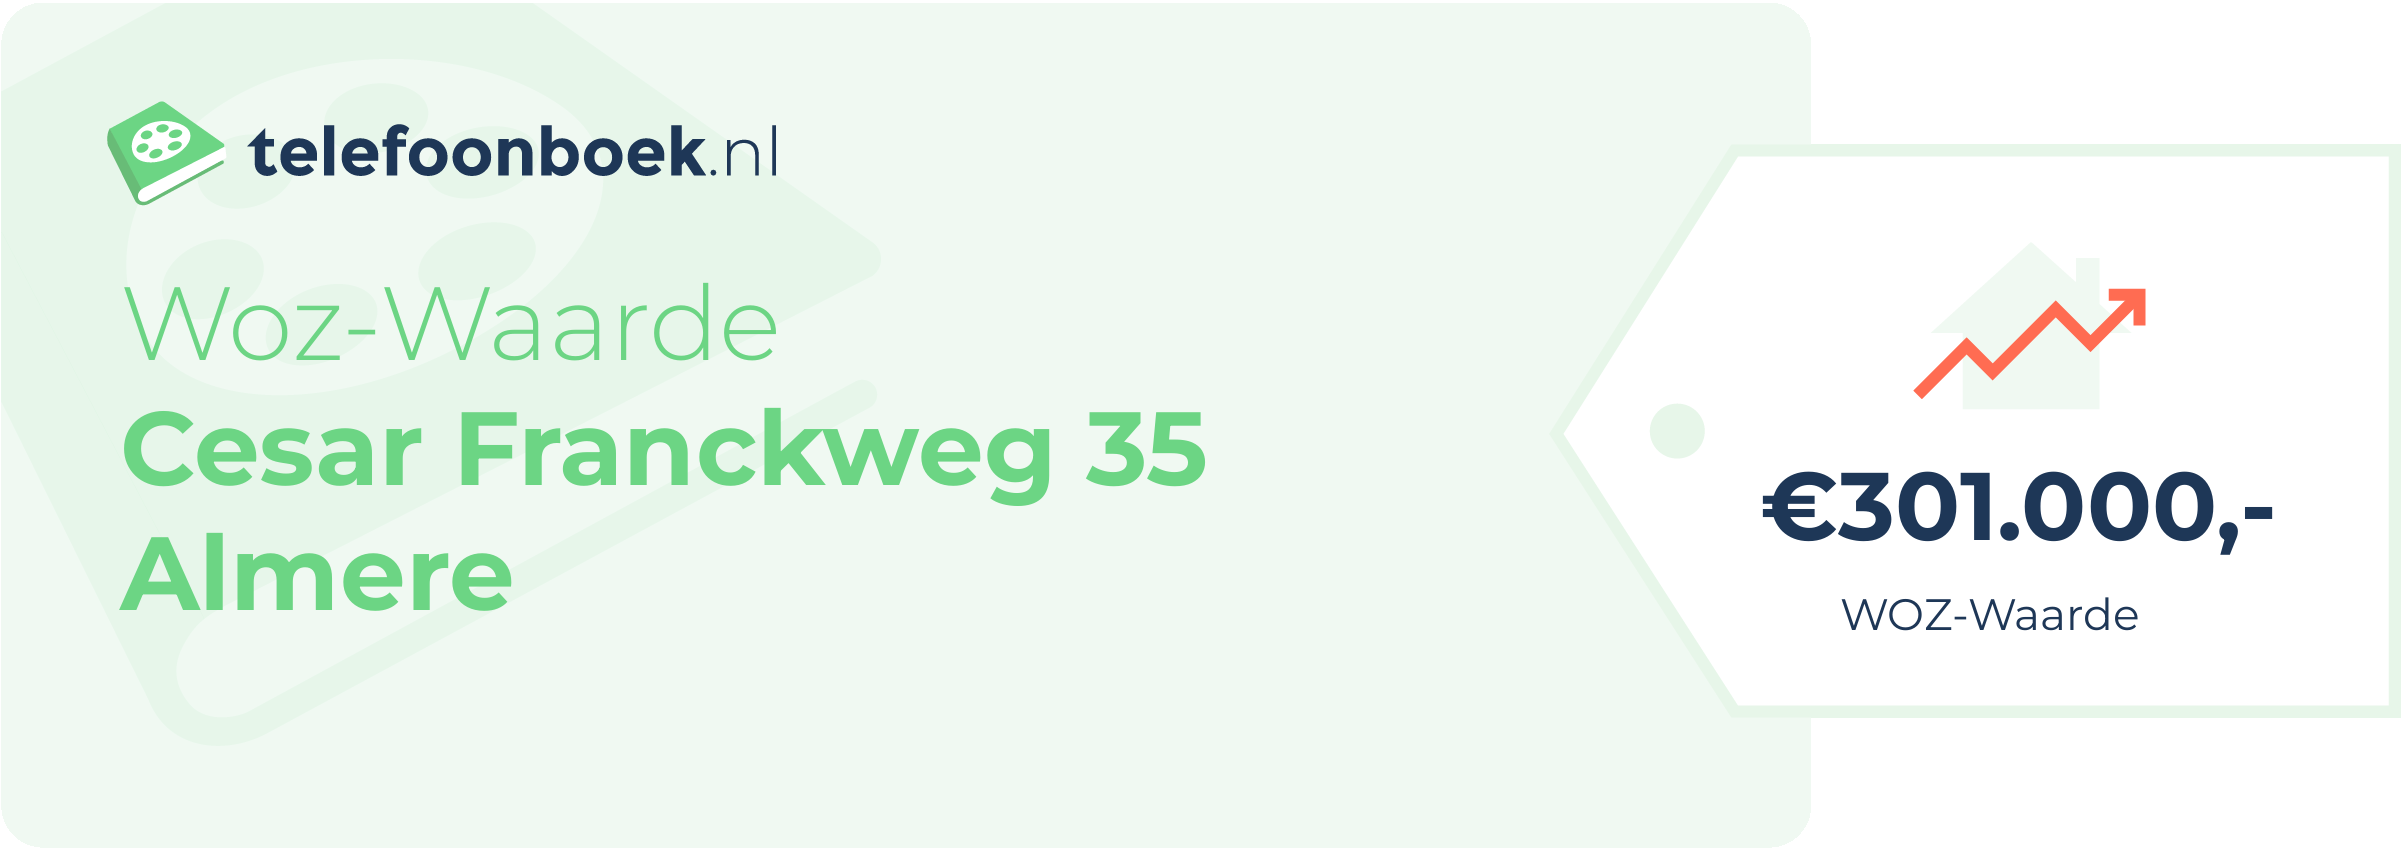 WOZ-waarde Cesar Franckweg 35 Almere